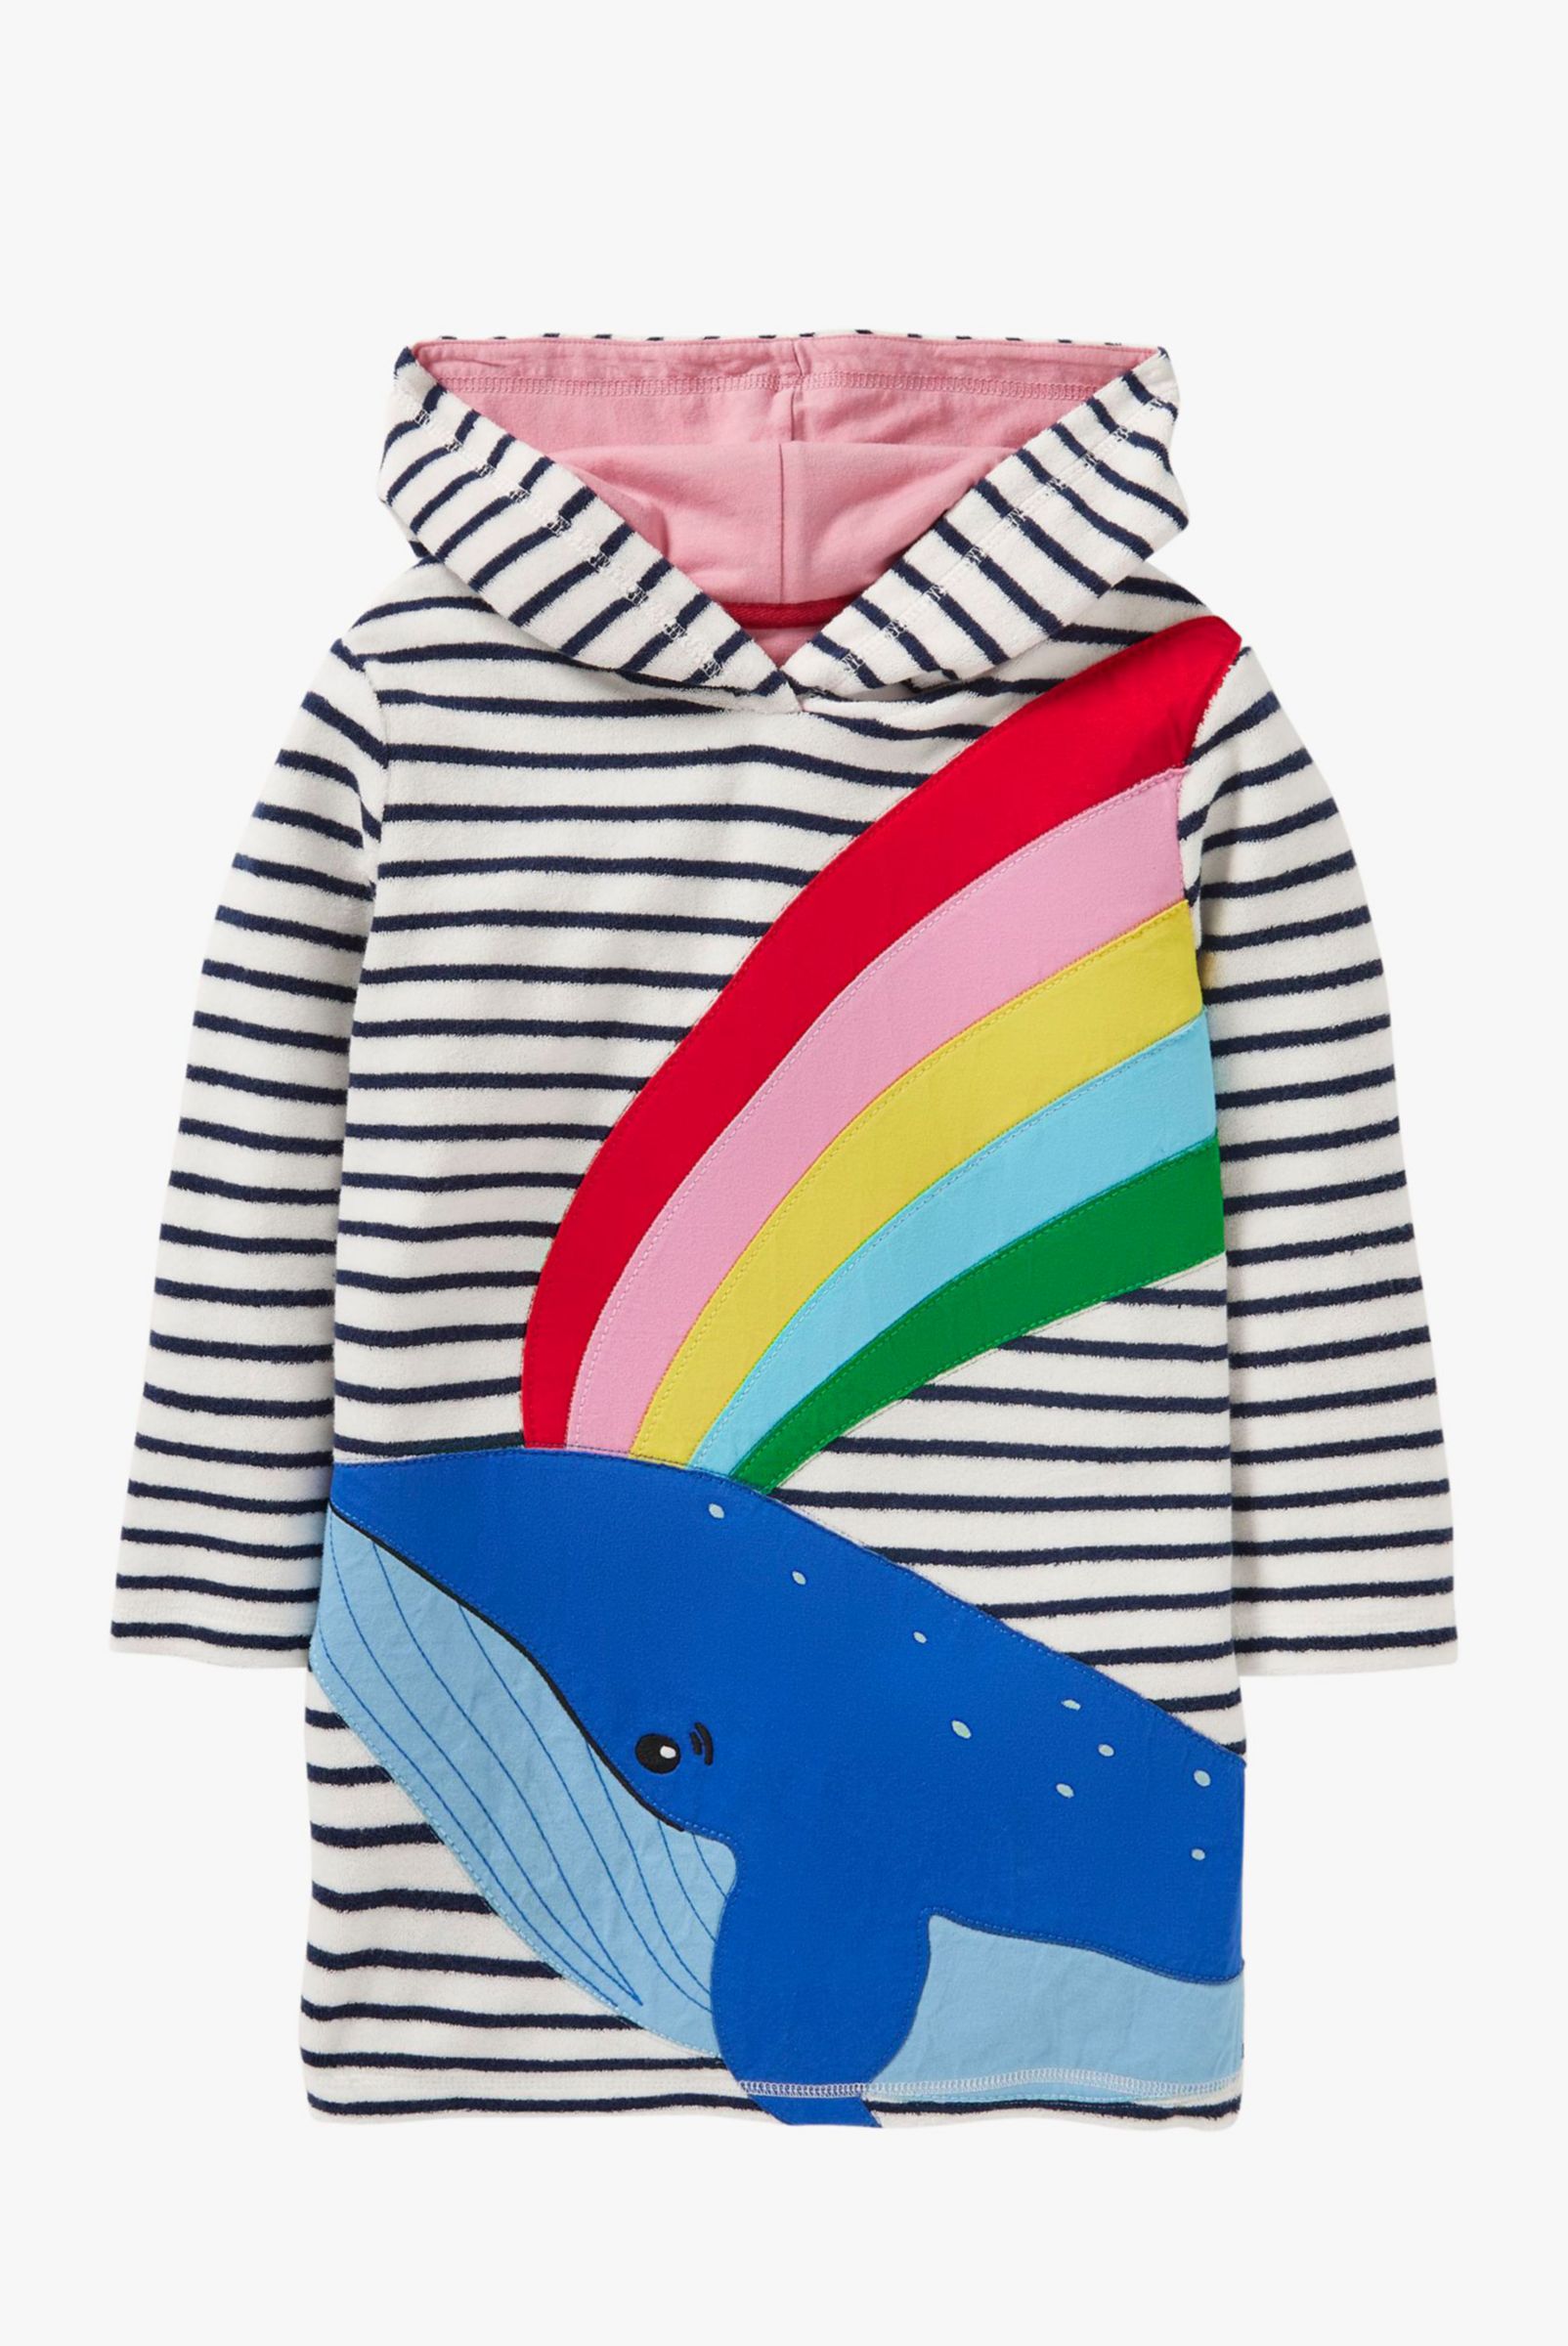 Mini Boden Kids' Appliqué Towelling Beach Dress